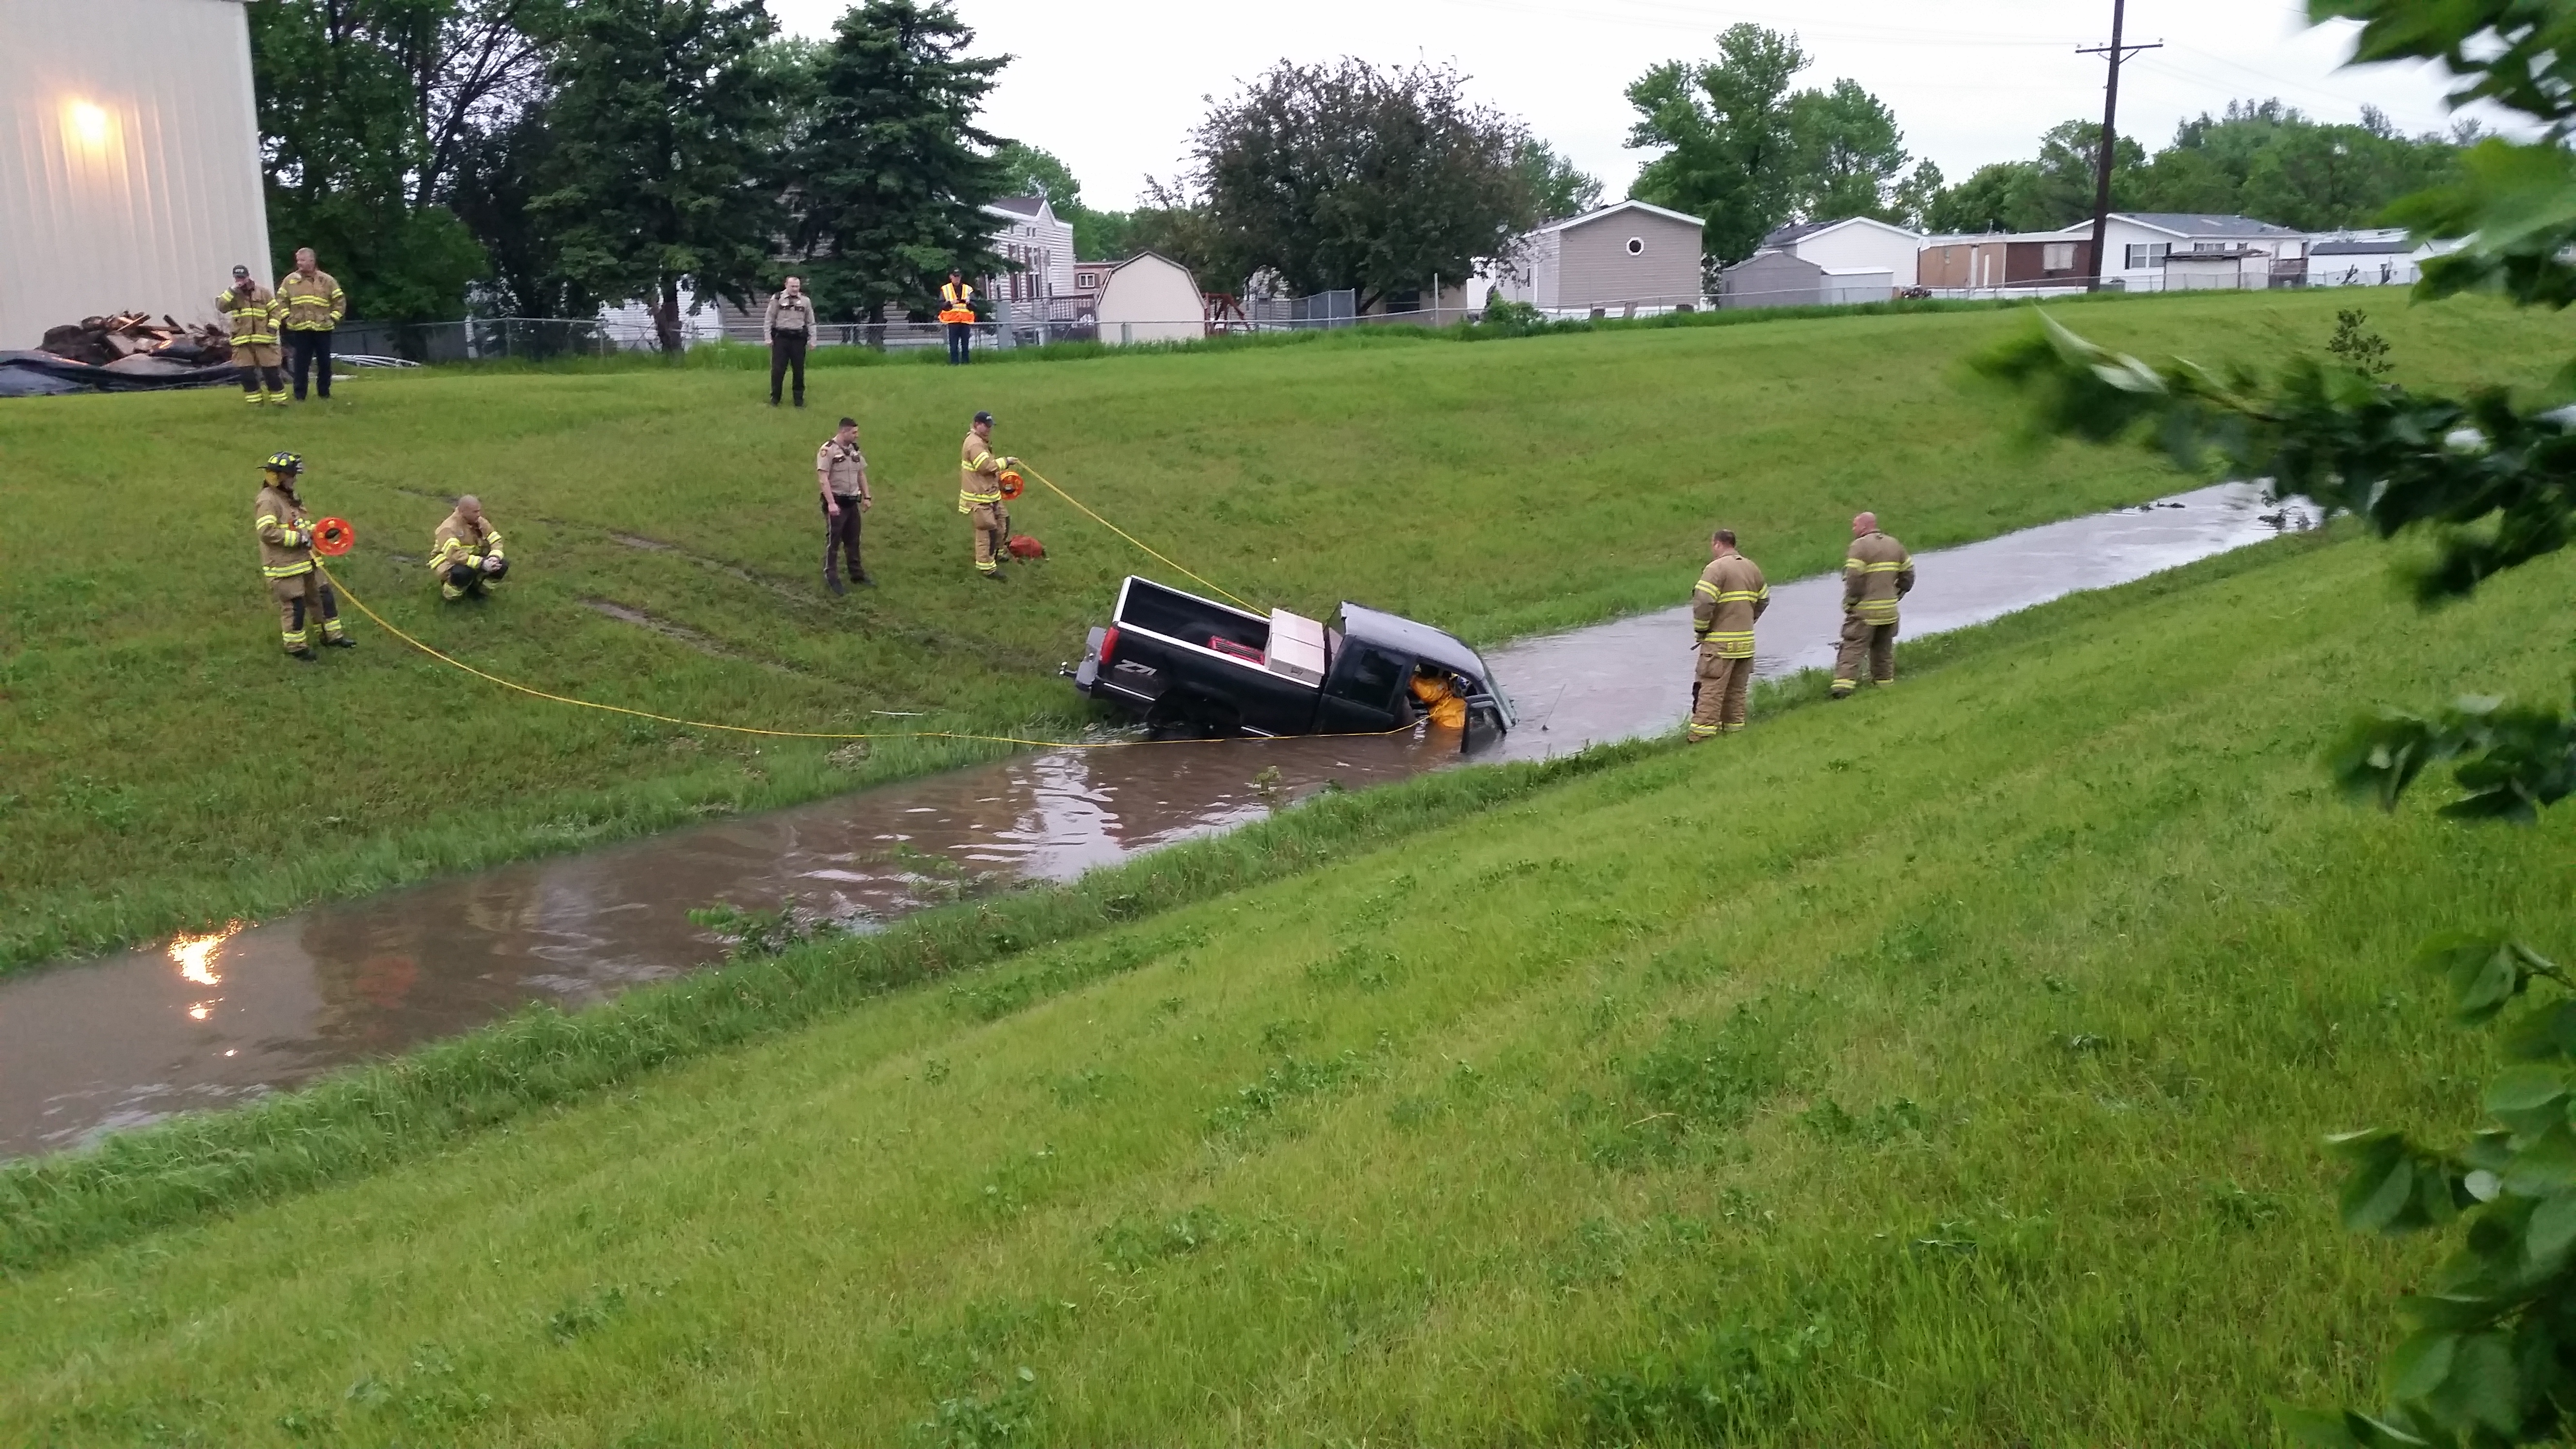 Truck found partially submerged in North Fargo drainage ditch